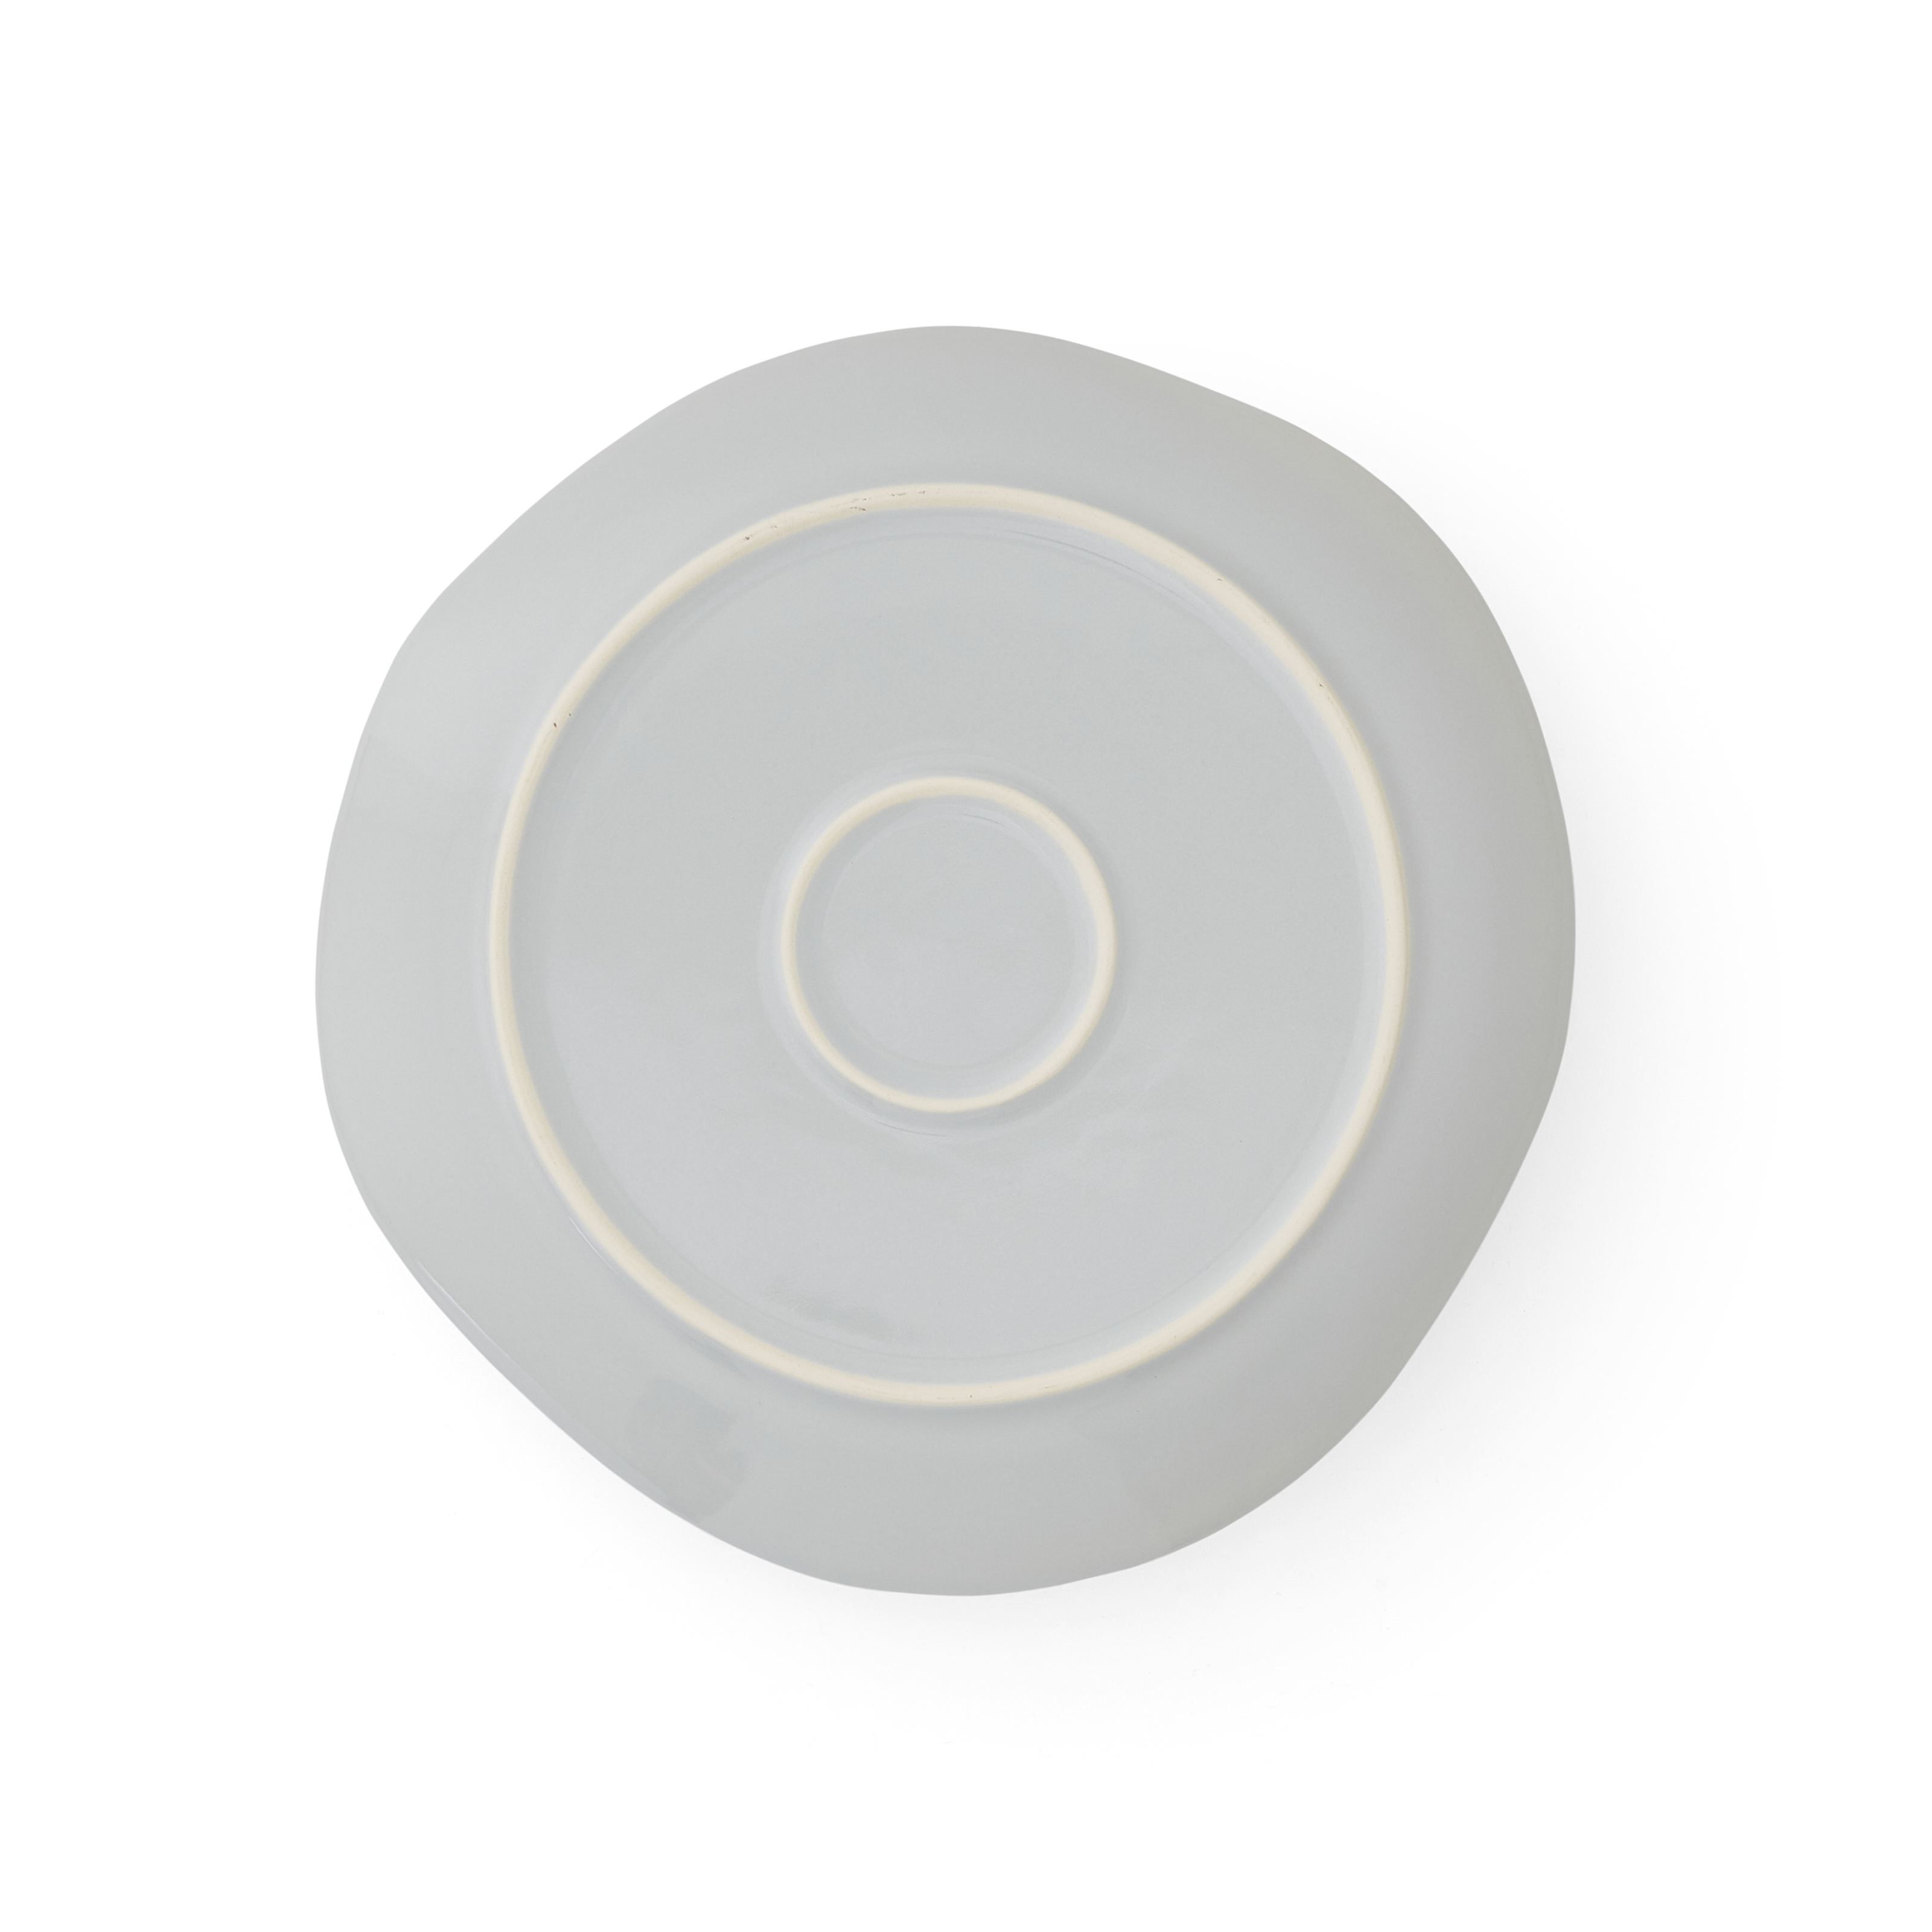 Sophie Conran Arbor 4 Dinner Plates, Grey image number null